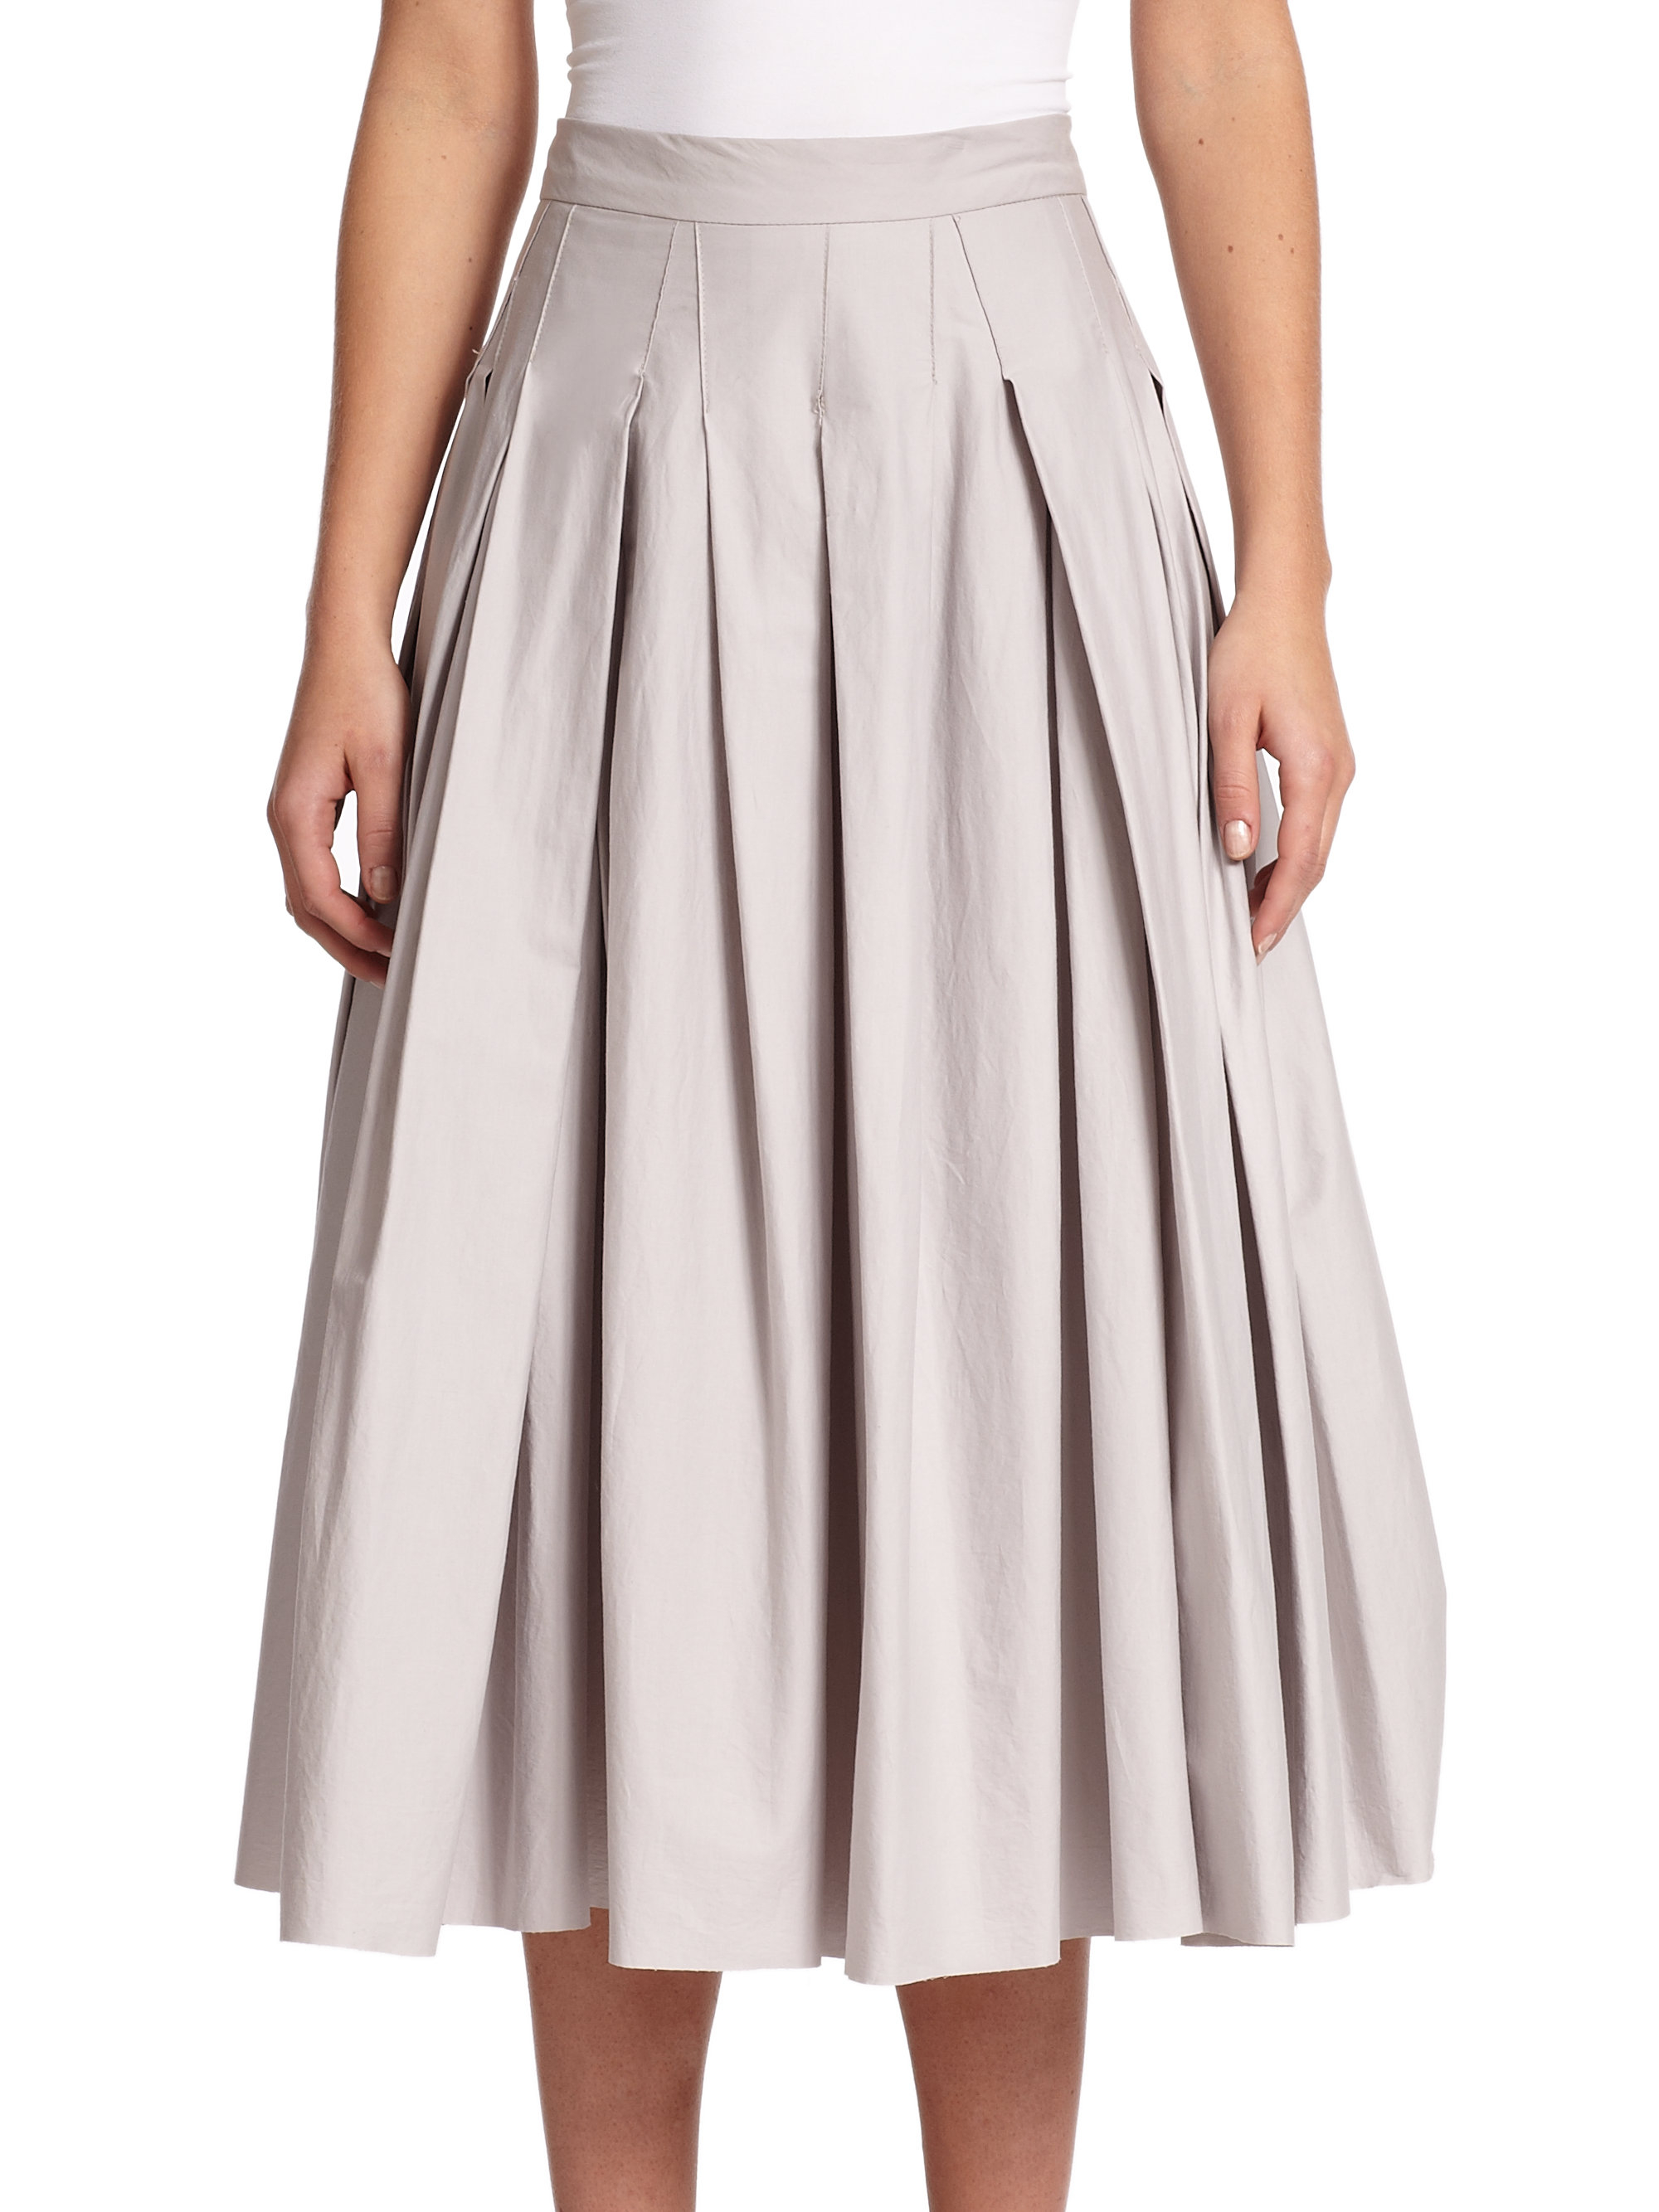 Lyst - Dkny Cotton Poplin Pleated Skirt in Gray